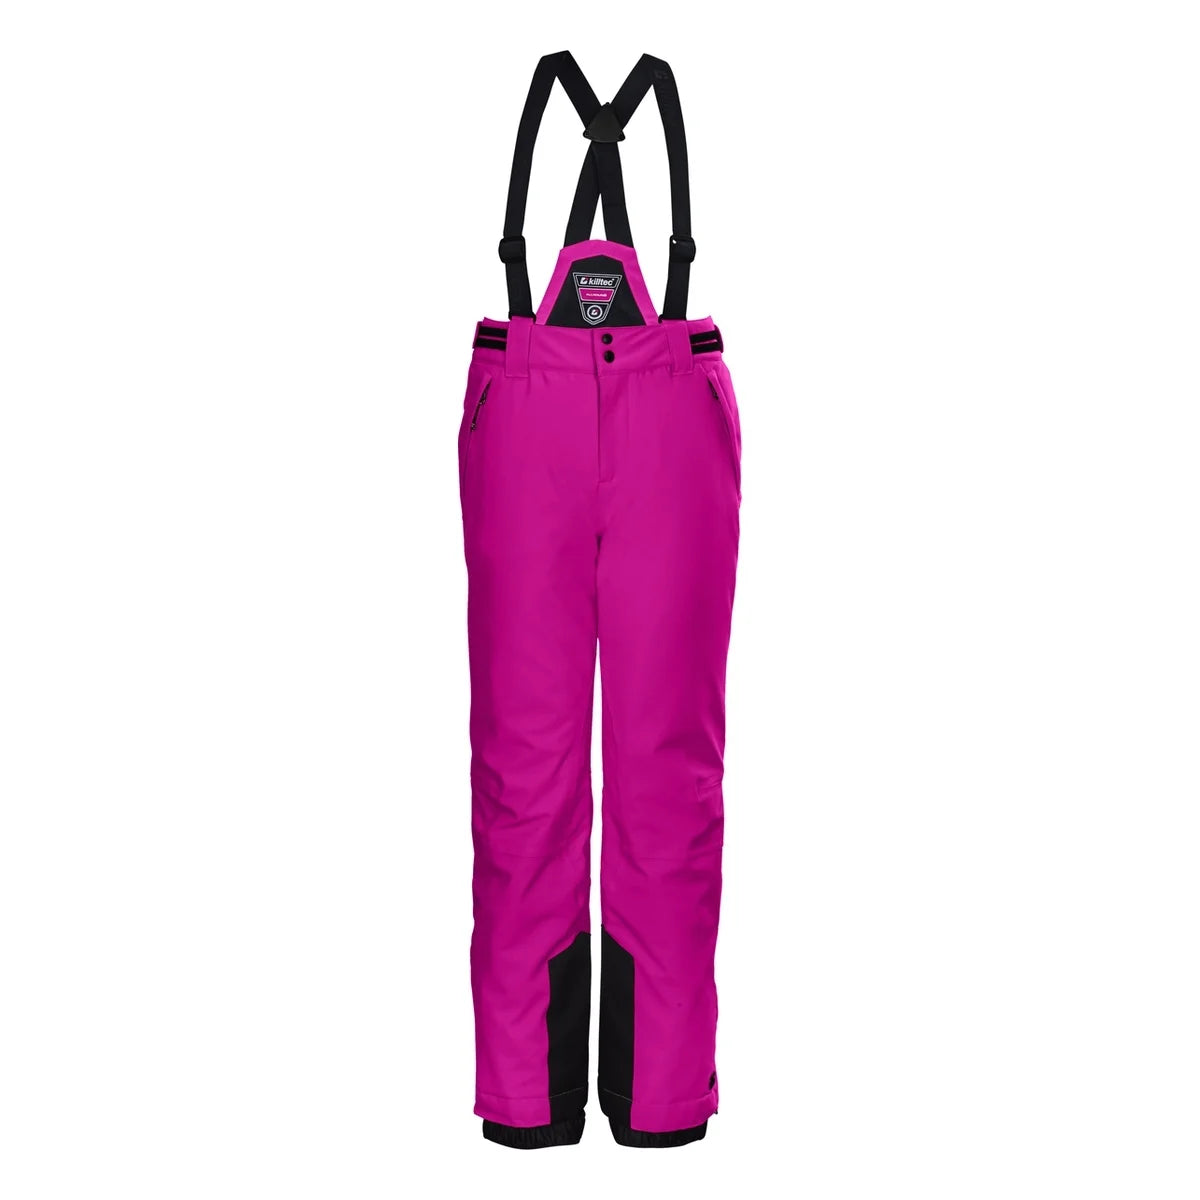 Killtec Girls KSW 77 Ski Pants – OutdoorsInc.com